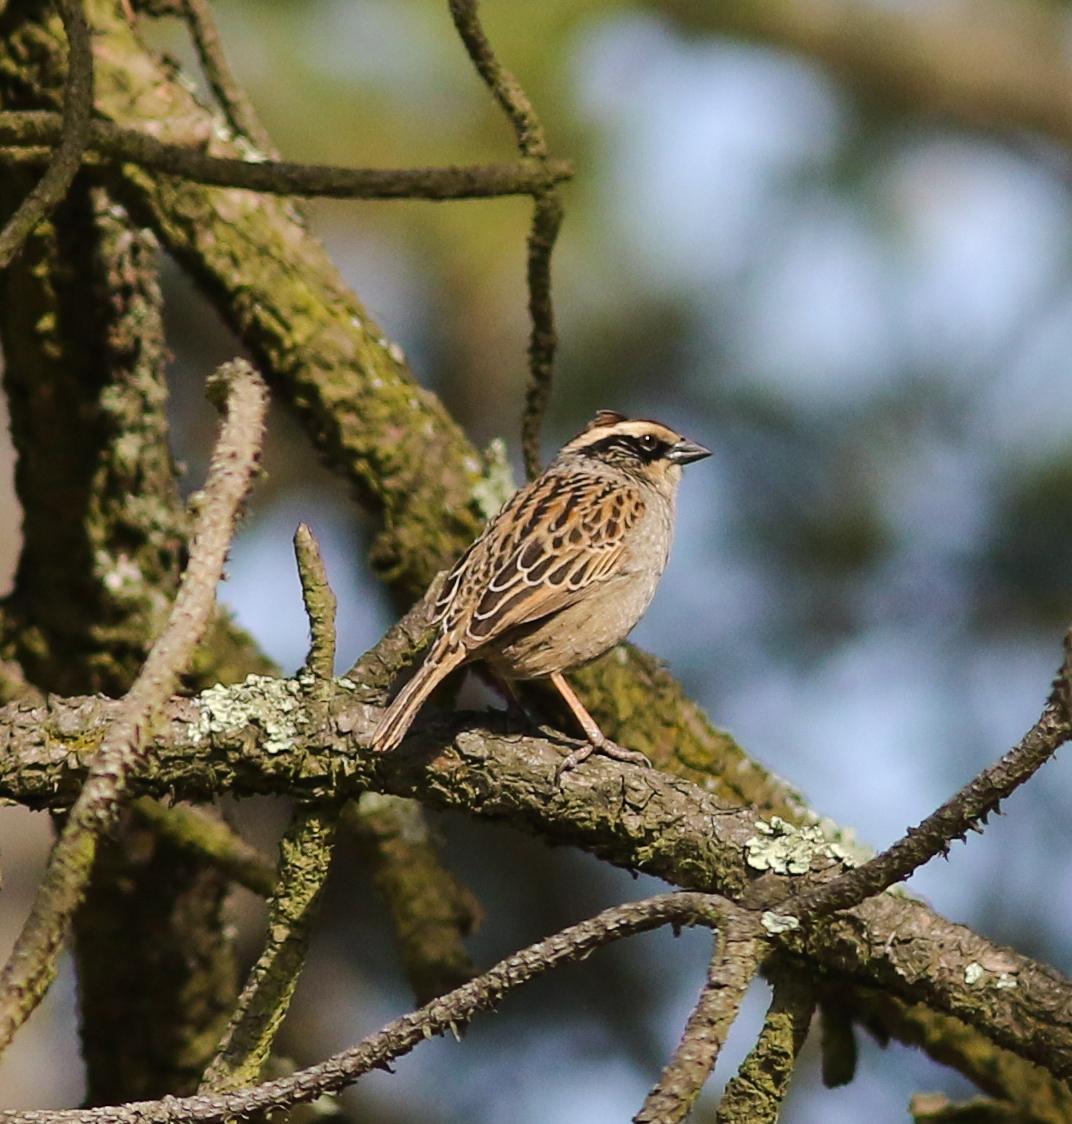 Striped Sparrow Photo by Leonardo Garrigues